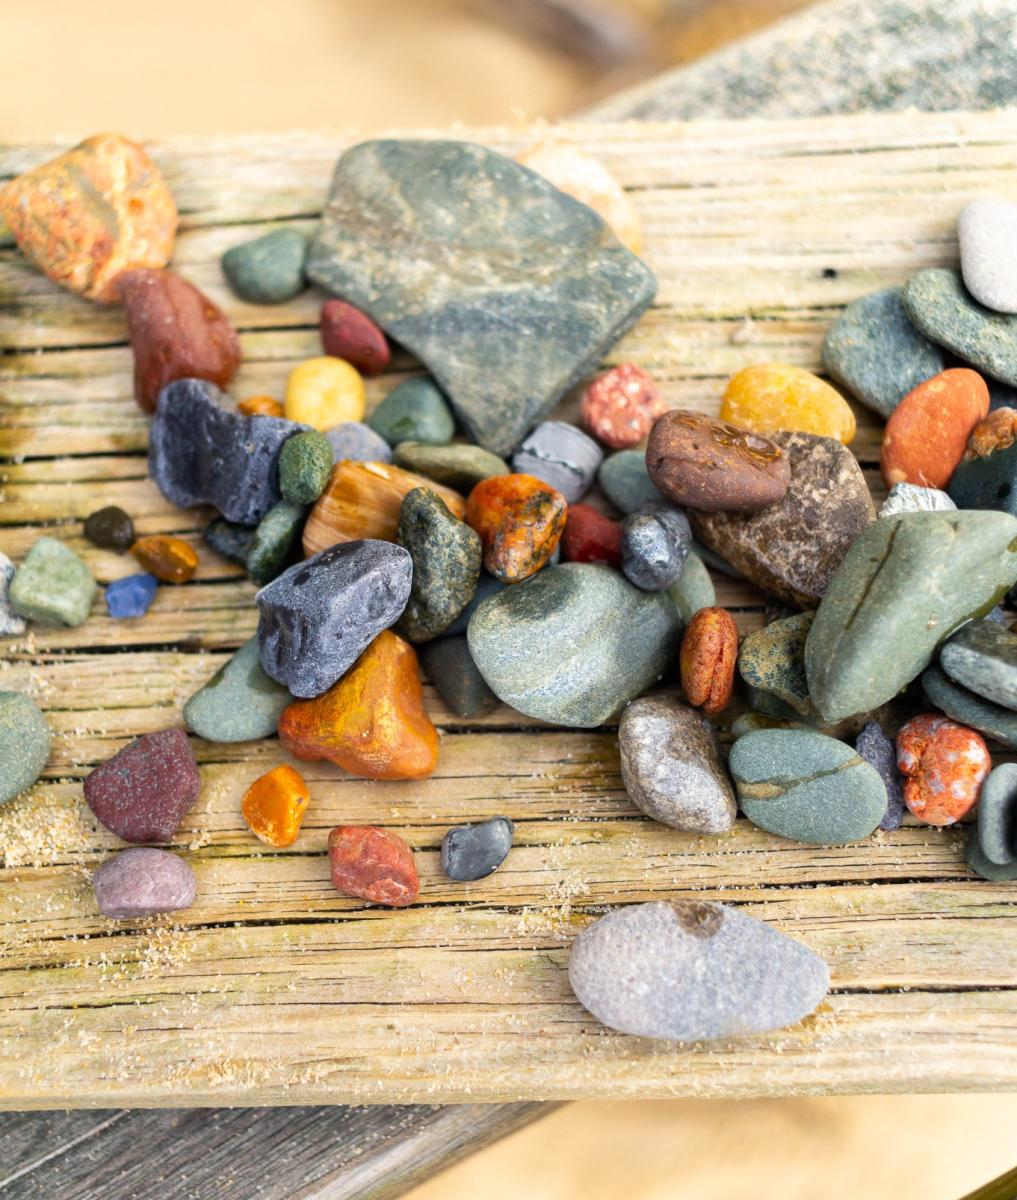 Rocks found along the lakeshore - Traverse City